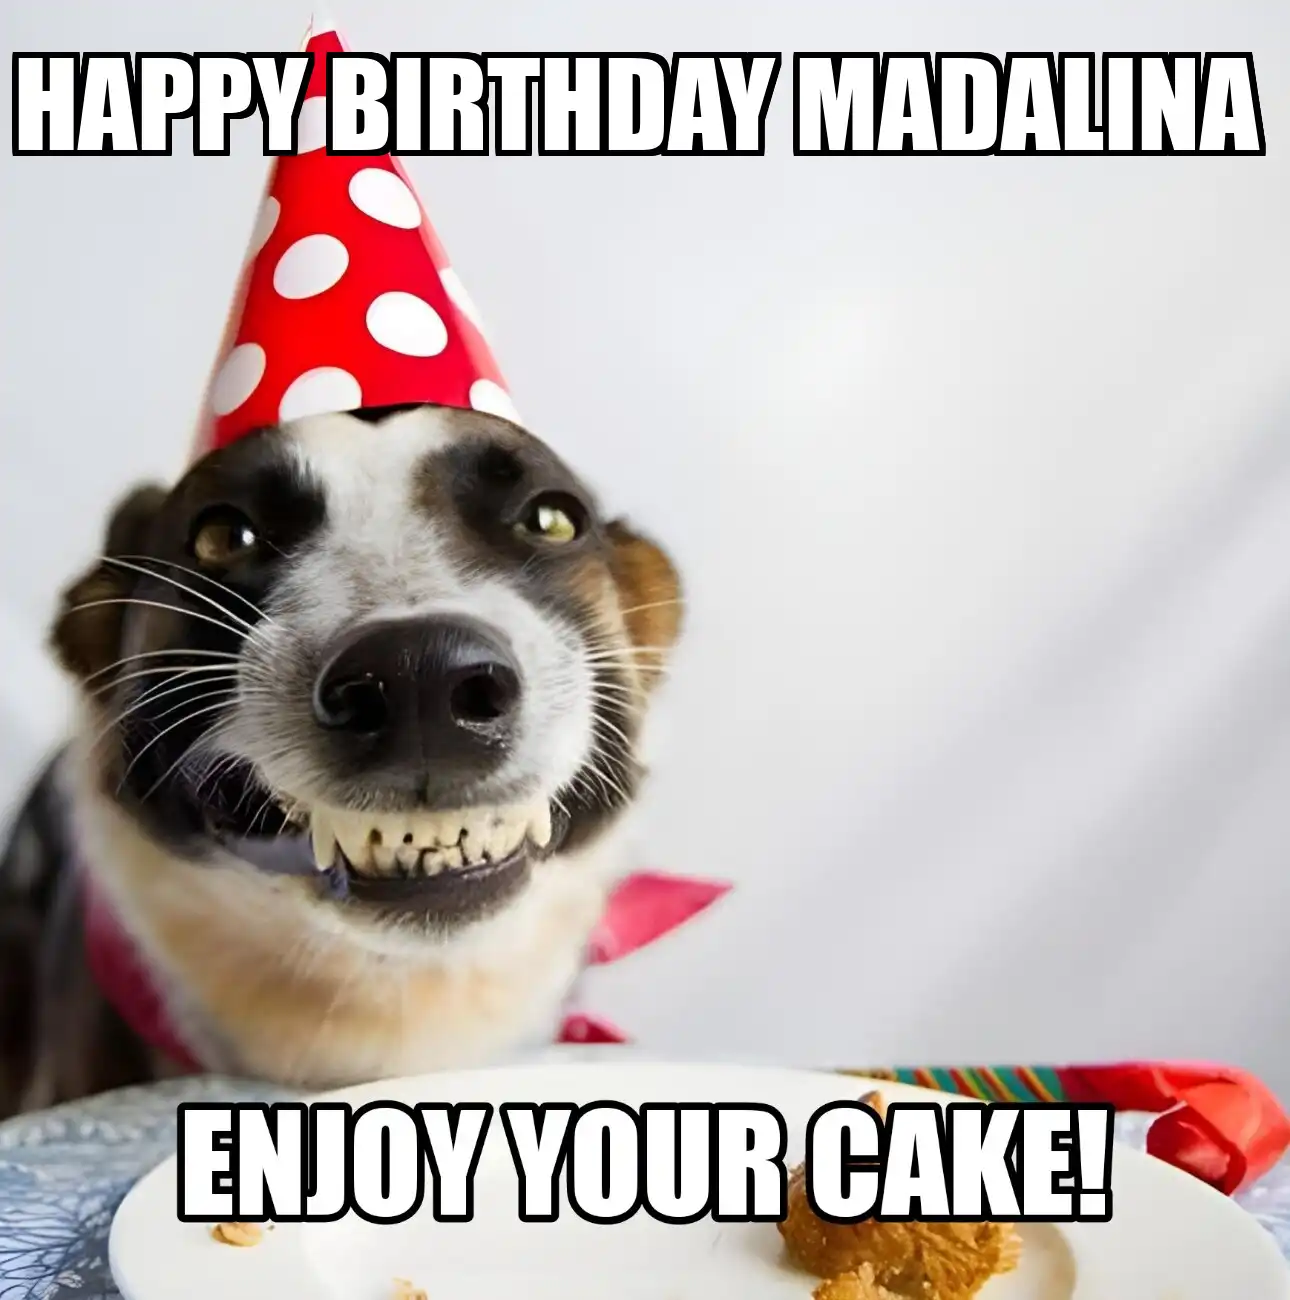 Happy Birthday Madalina Enjoy Your Cake Dog Meme